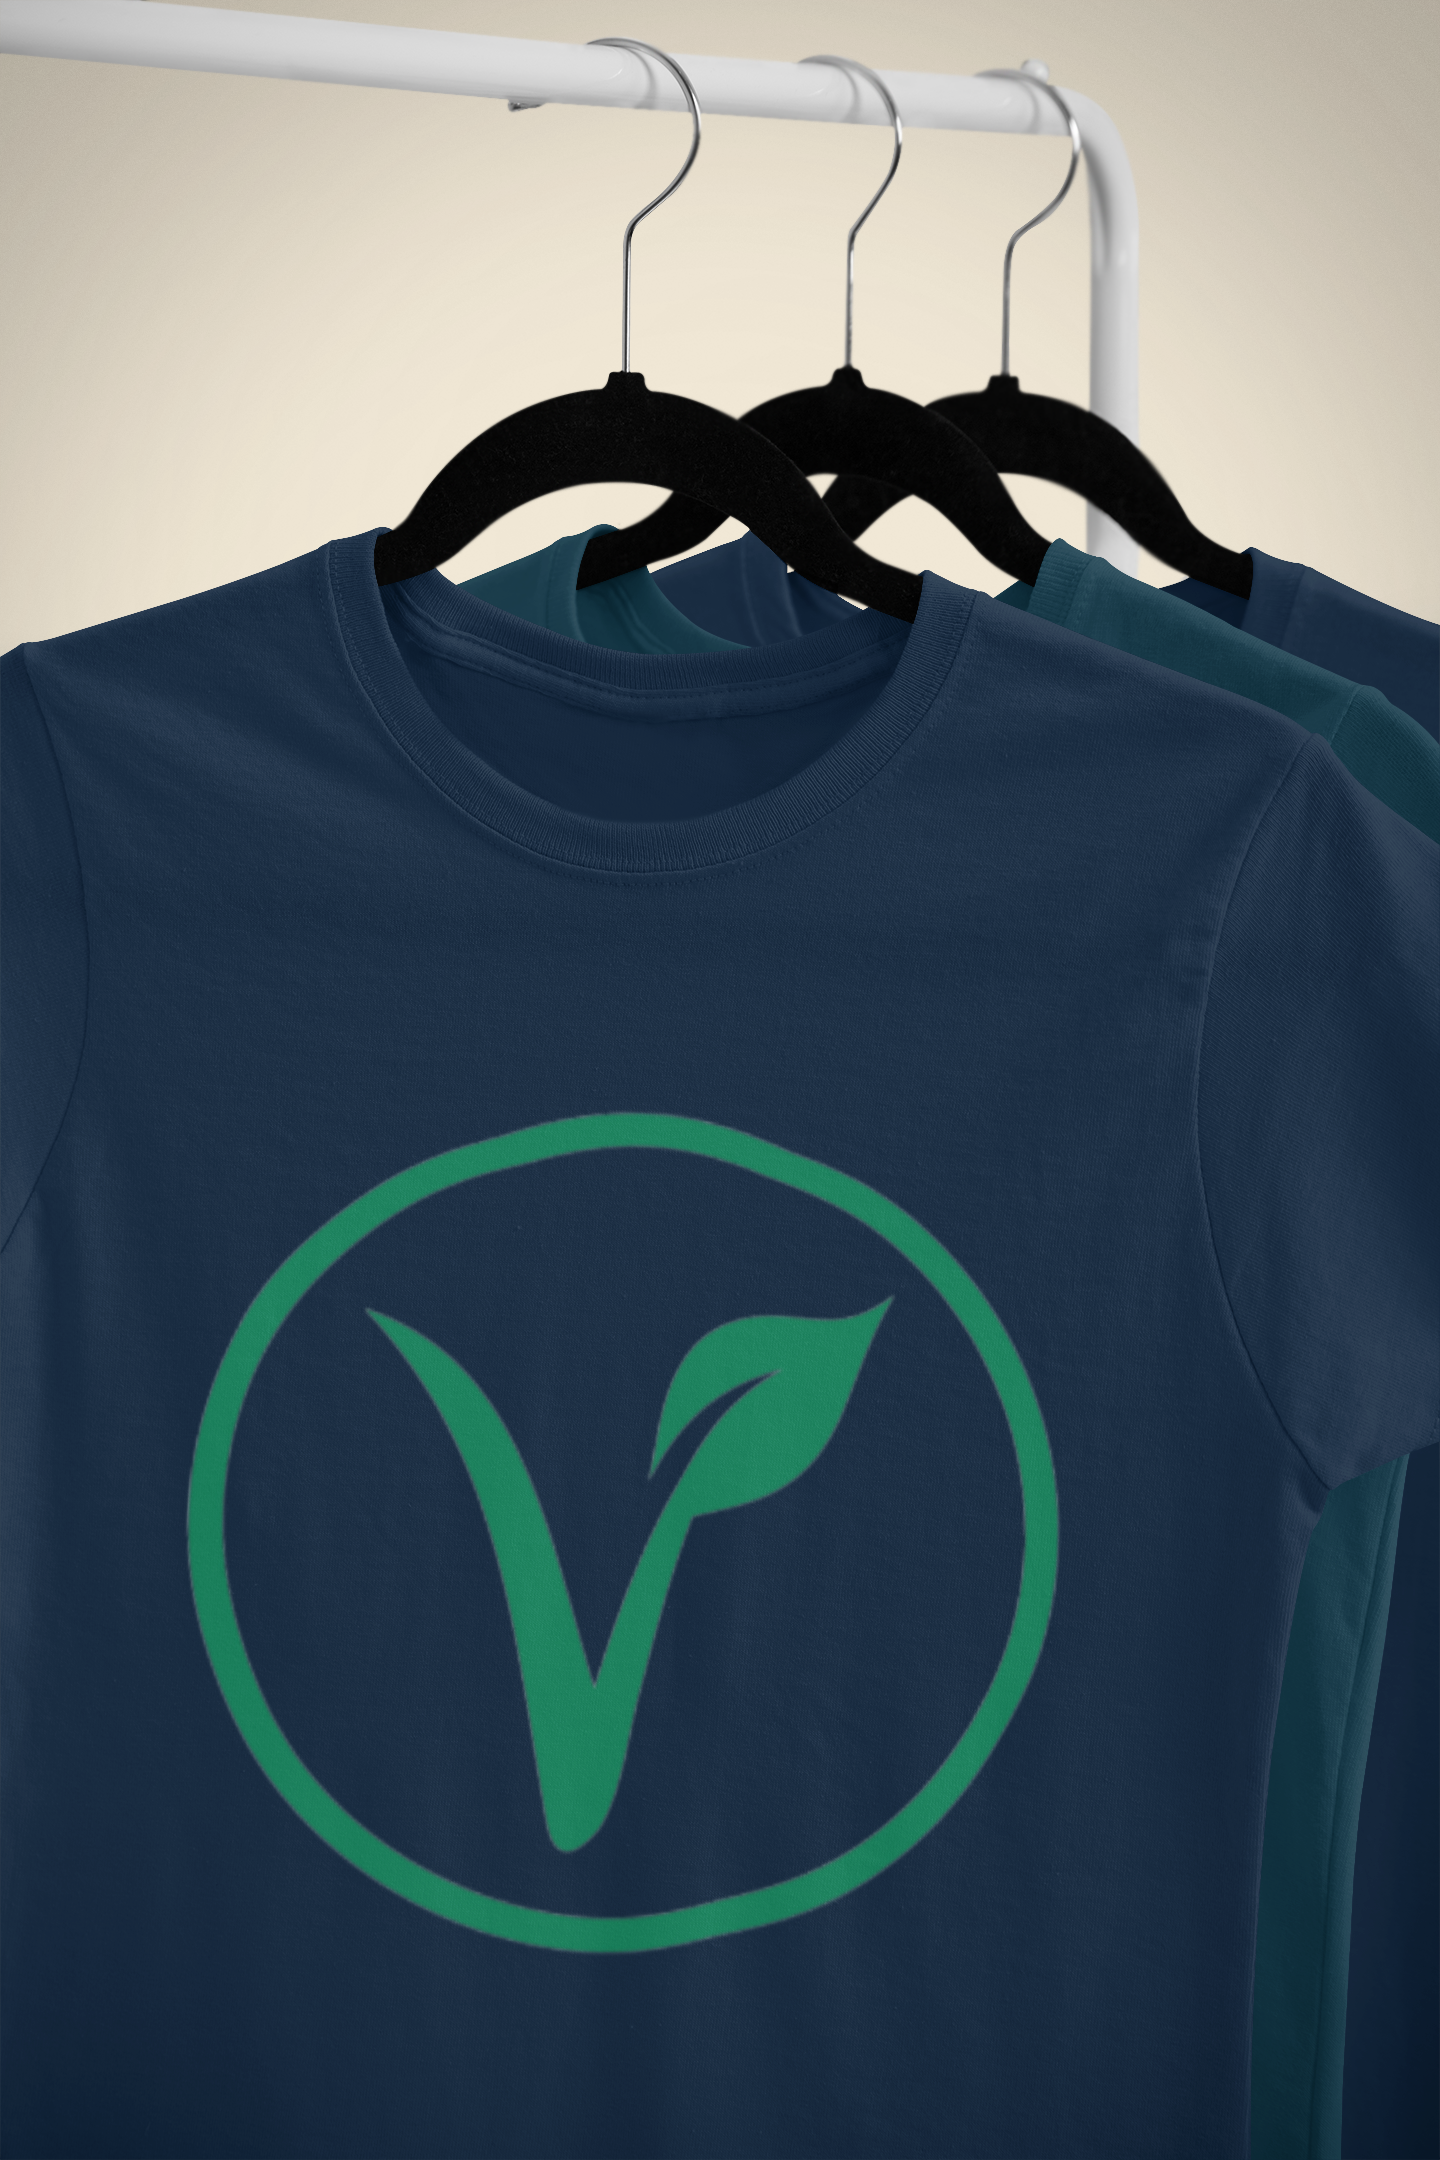 V for Vegan - Adult Tee